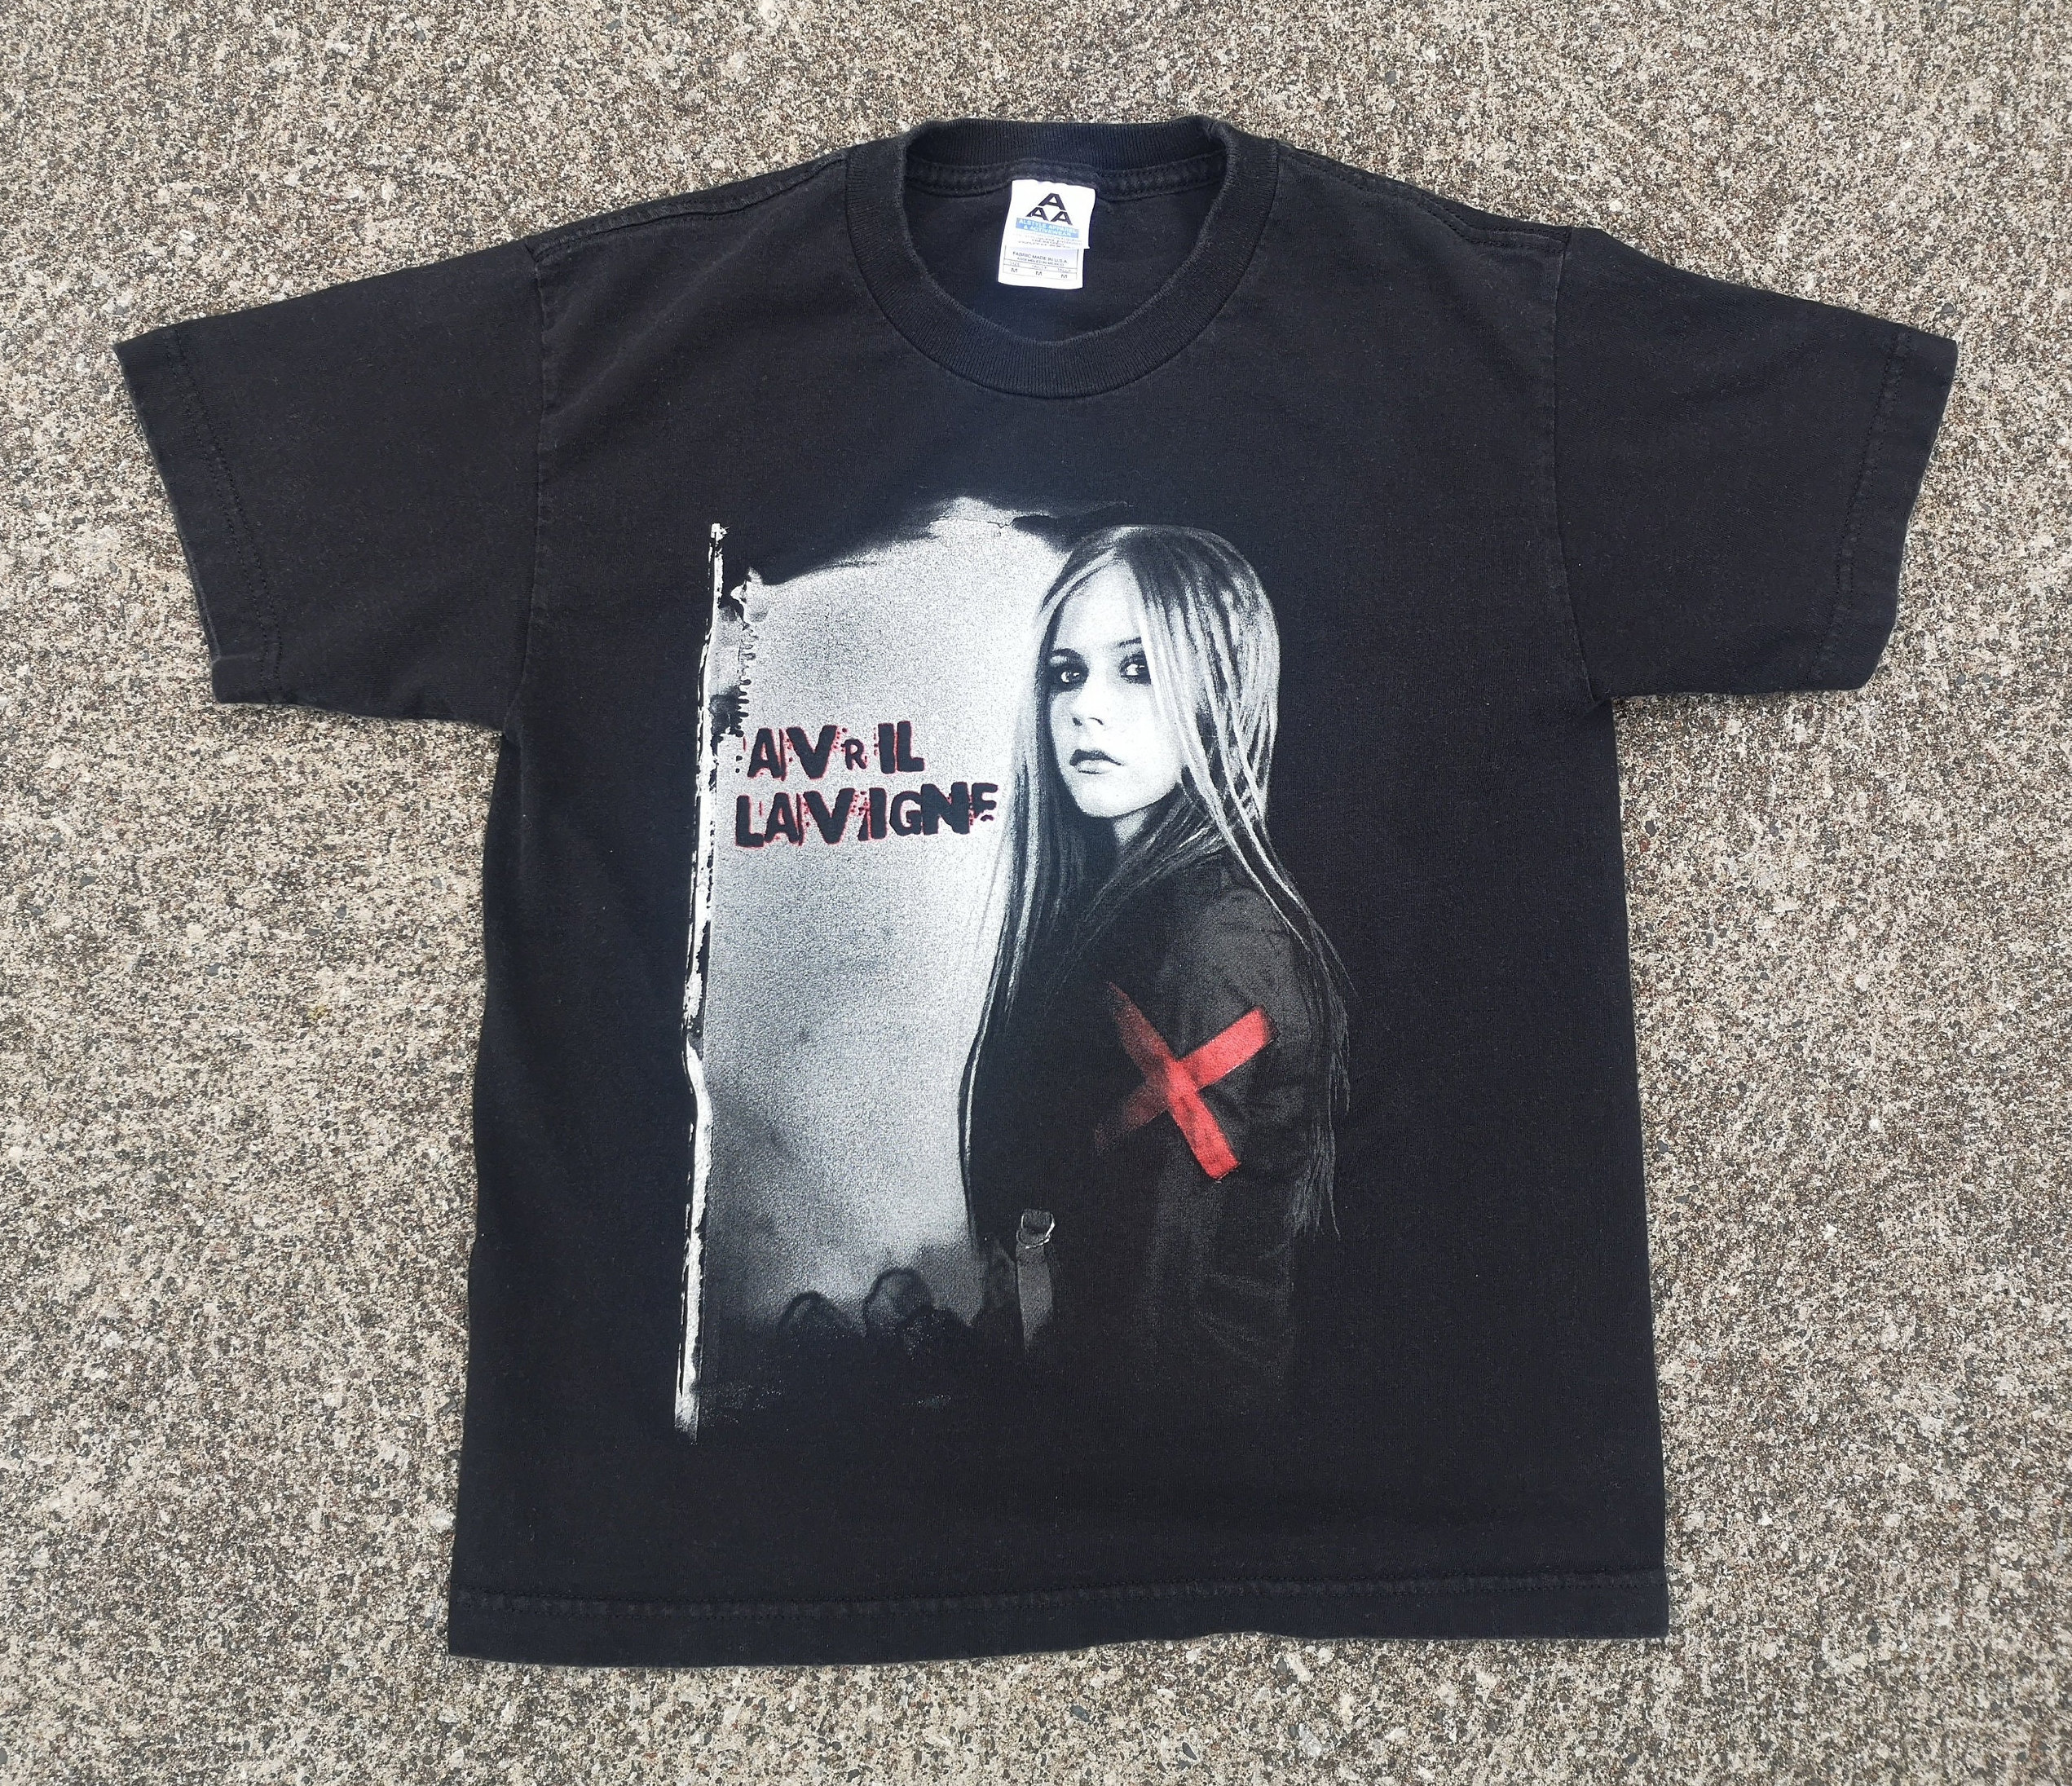 Vintage 2004 Avril Lavigne "Under my Skin" Tour Shirt